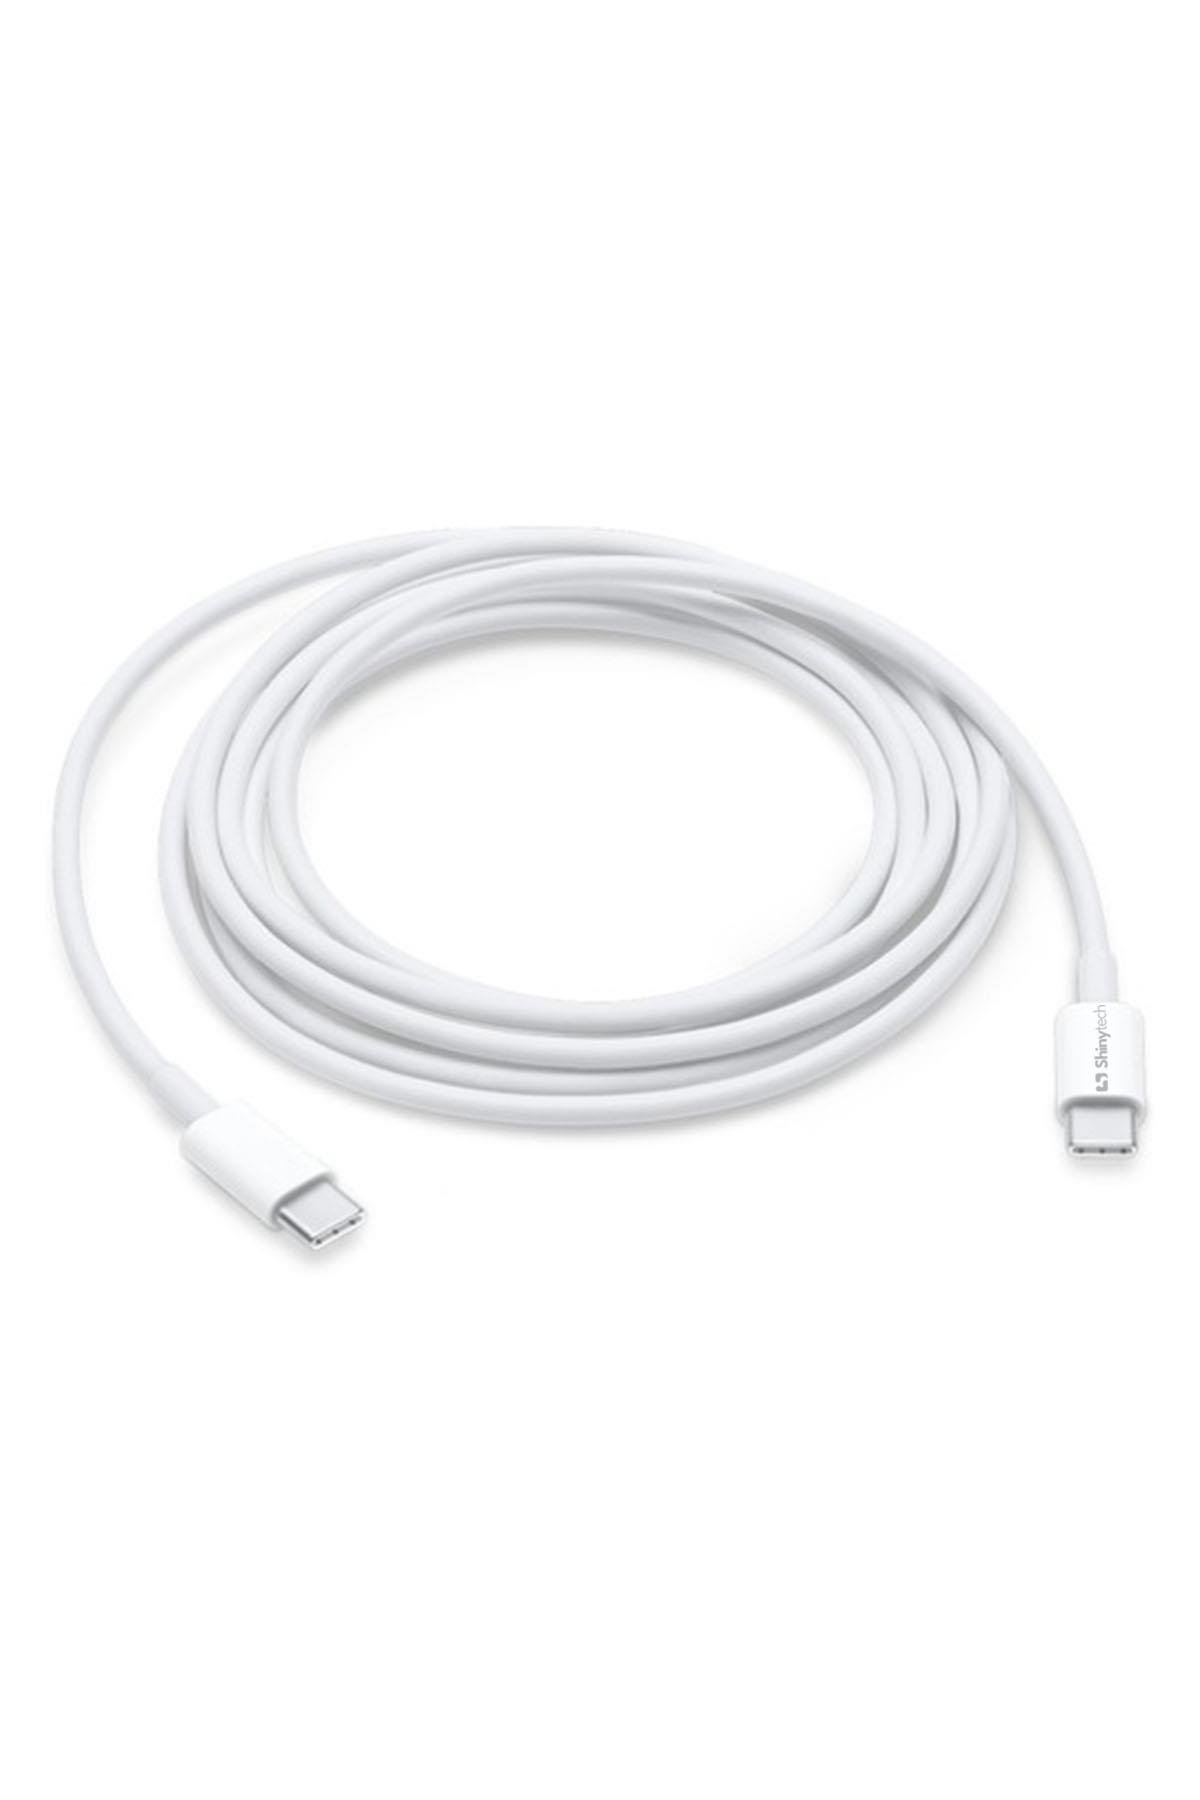 Beyaz Apple iPhone iPad Uyumlu USB-C to USB-C Şarj Kablosu (1m) Modelleri |  ShinyTech